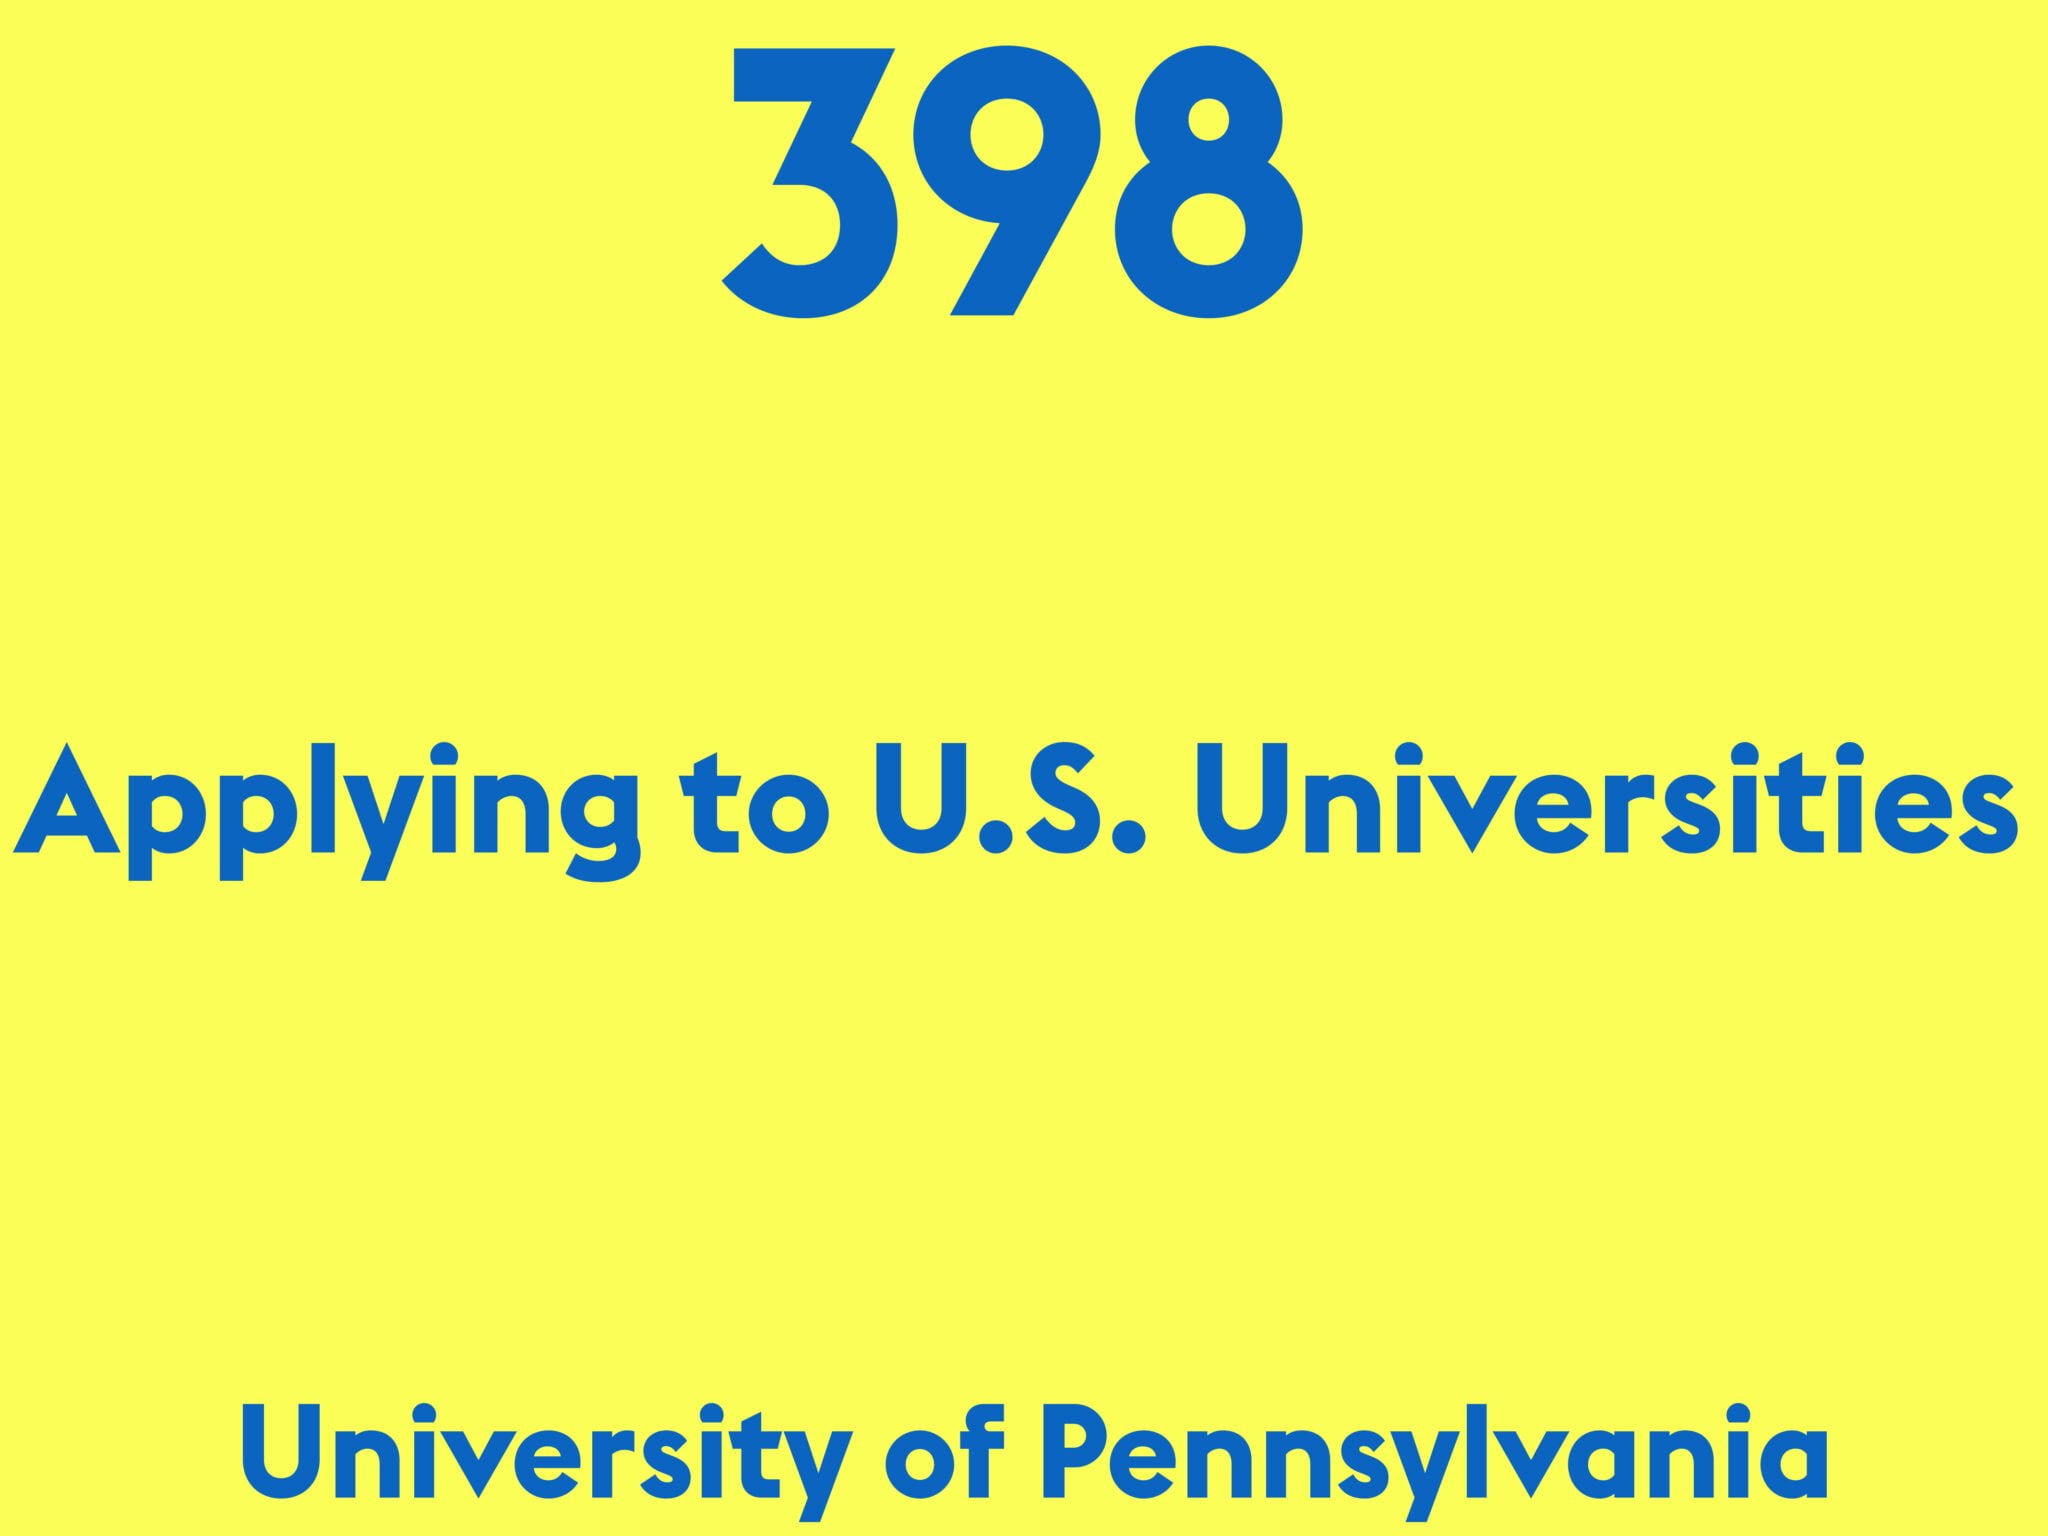 Applying to U.S. Universities